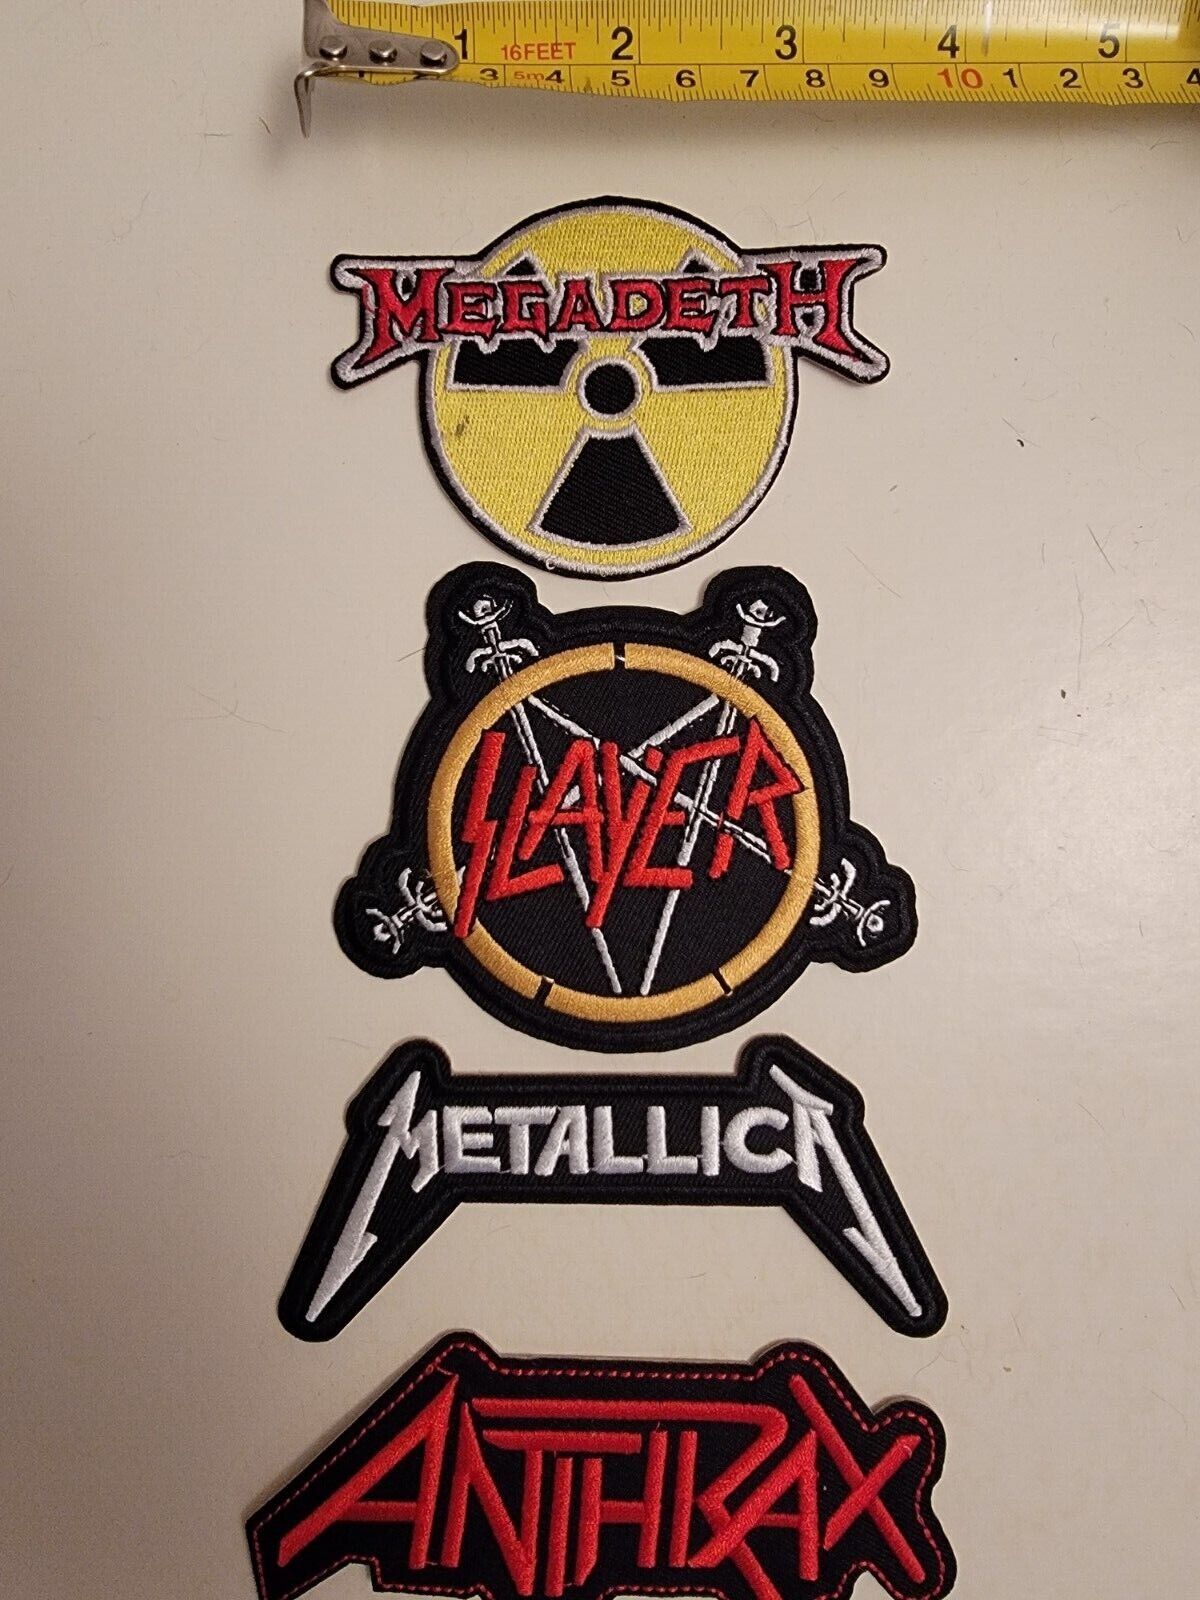 Megadeth Slayer Metallica Anthrax Patch Lot The Big 4 Metal Iron On Sew